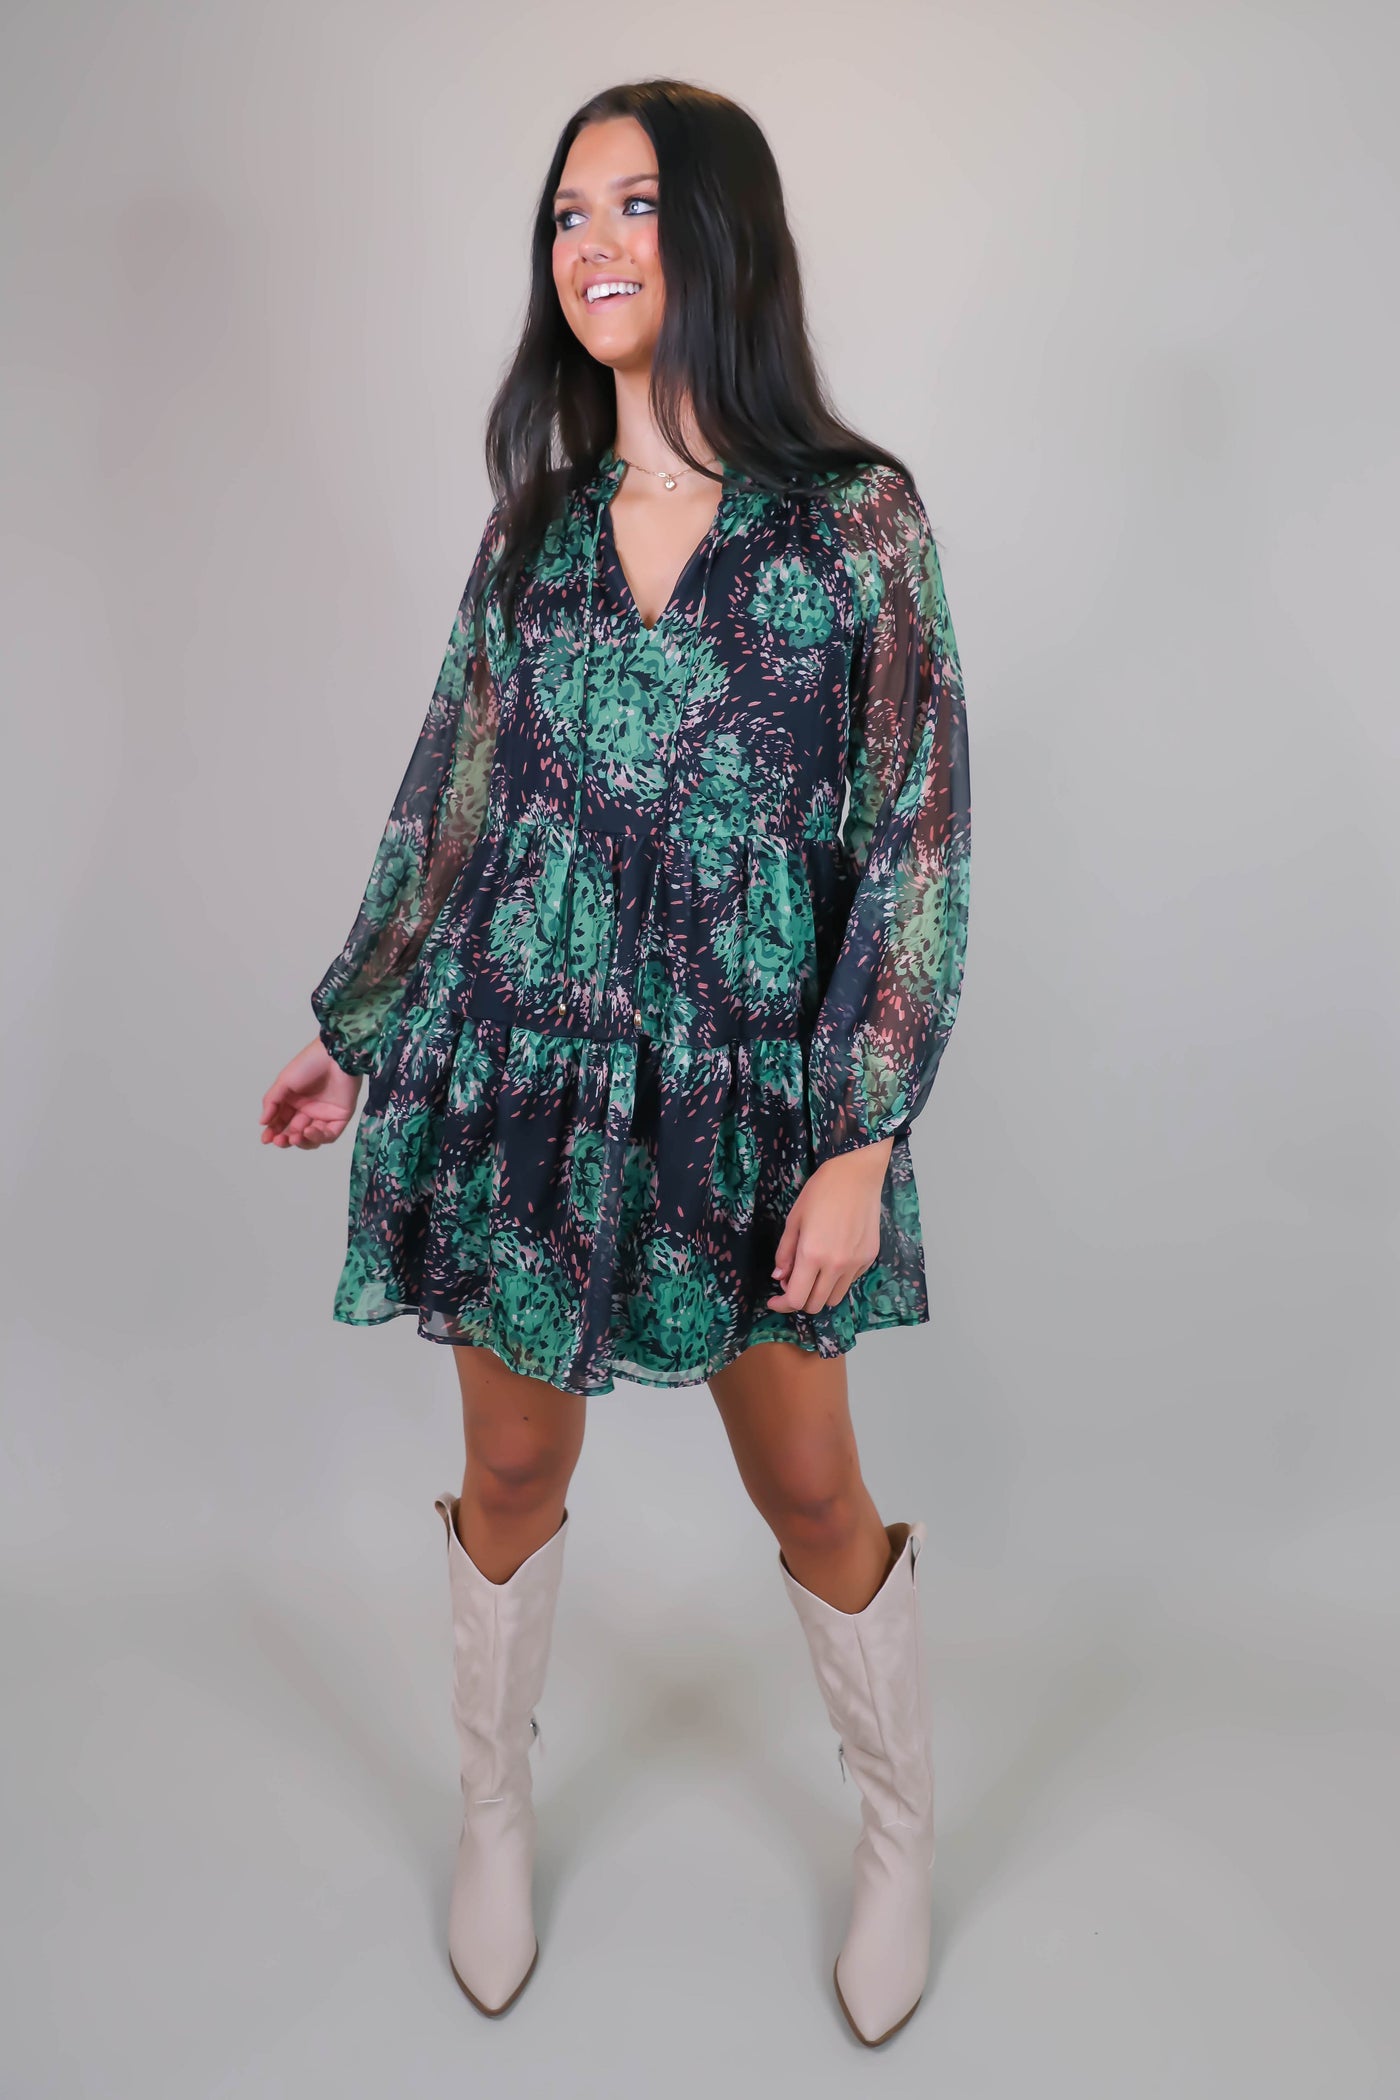 Tiered Mini Dress- Colorful Long Sleeve Dress- Woven Lightweight Dress- Entro Dress